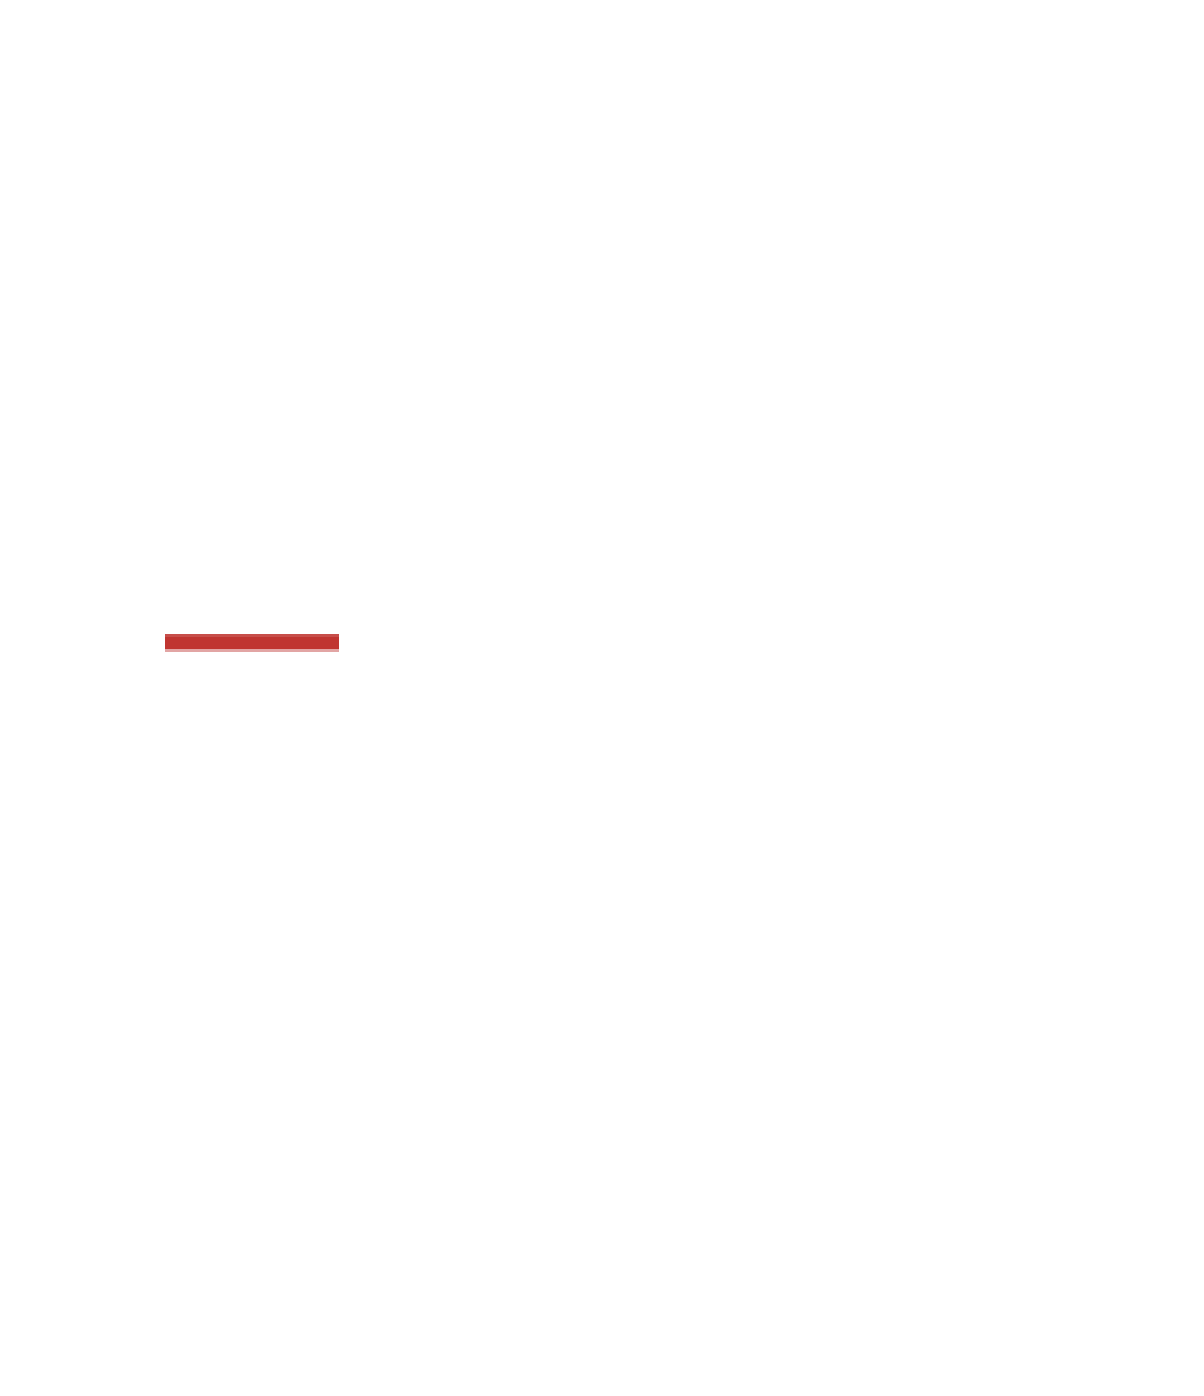 Hnason Robotics